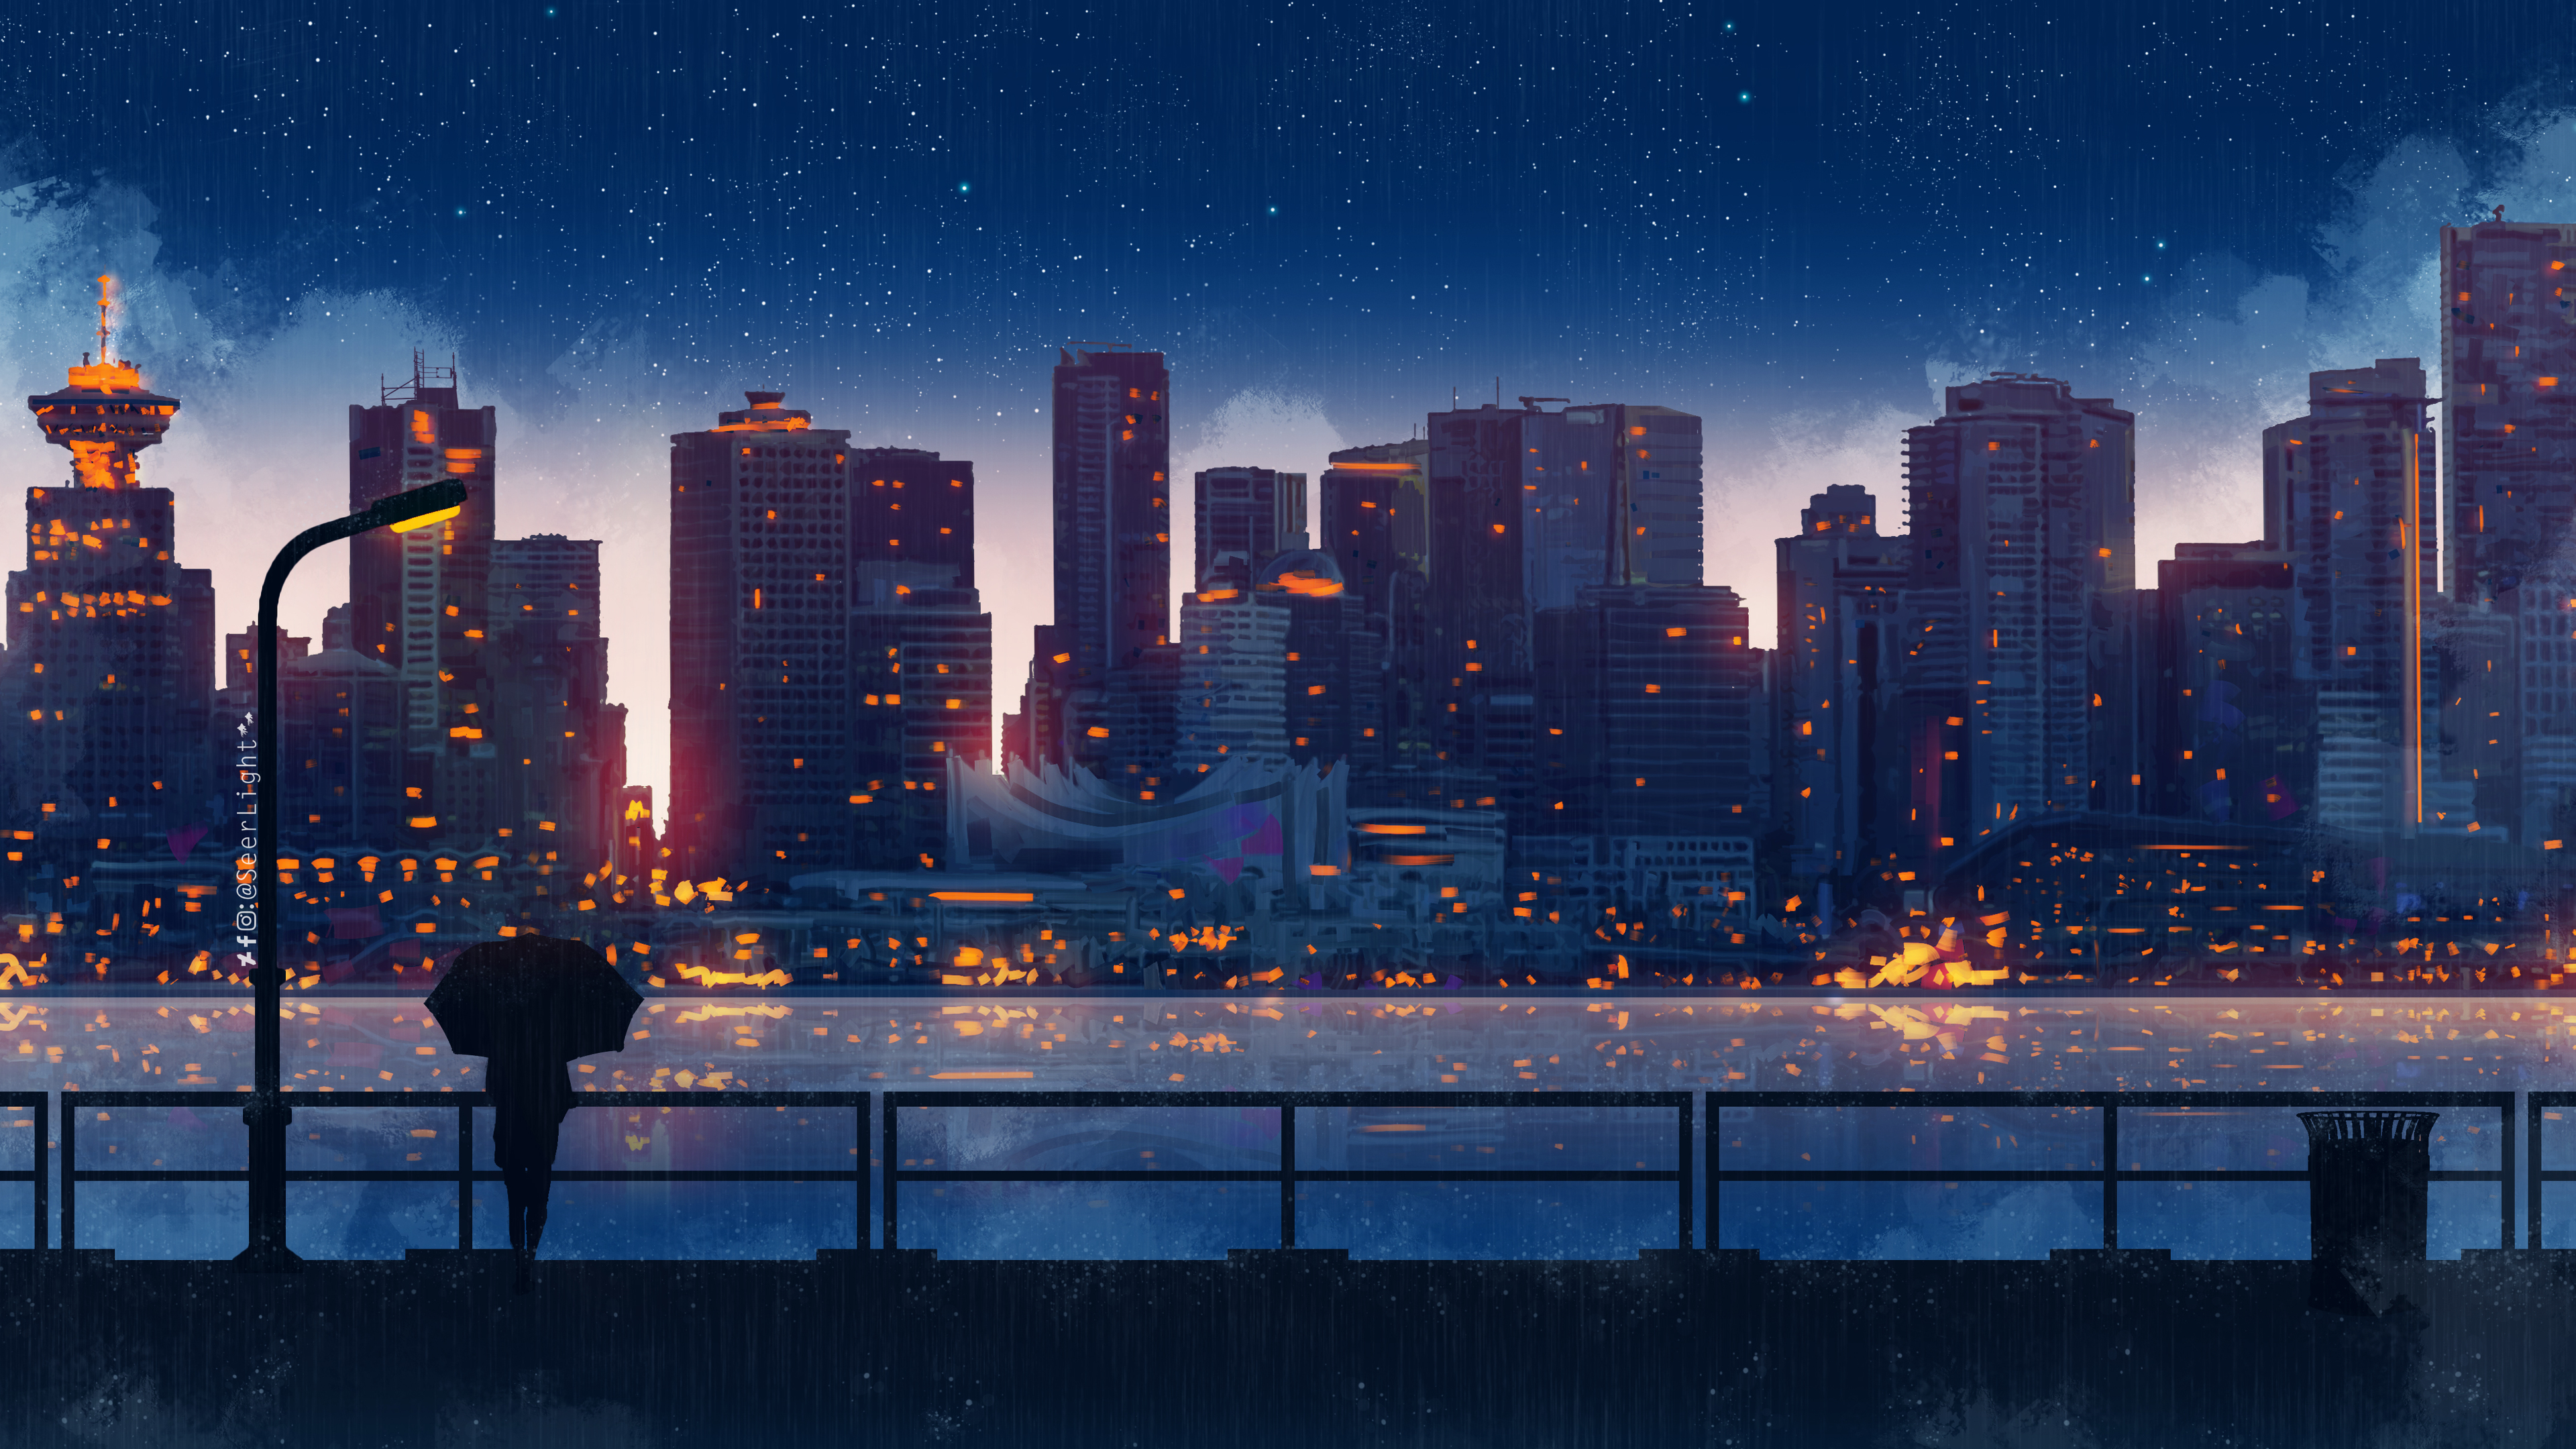 Alone Anime Girl Raining Night Scenery 4K Phone iPhone Wallpaper 644a